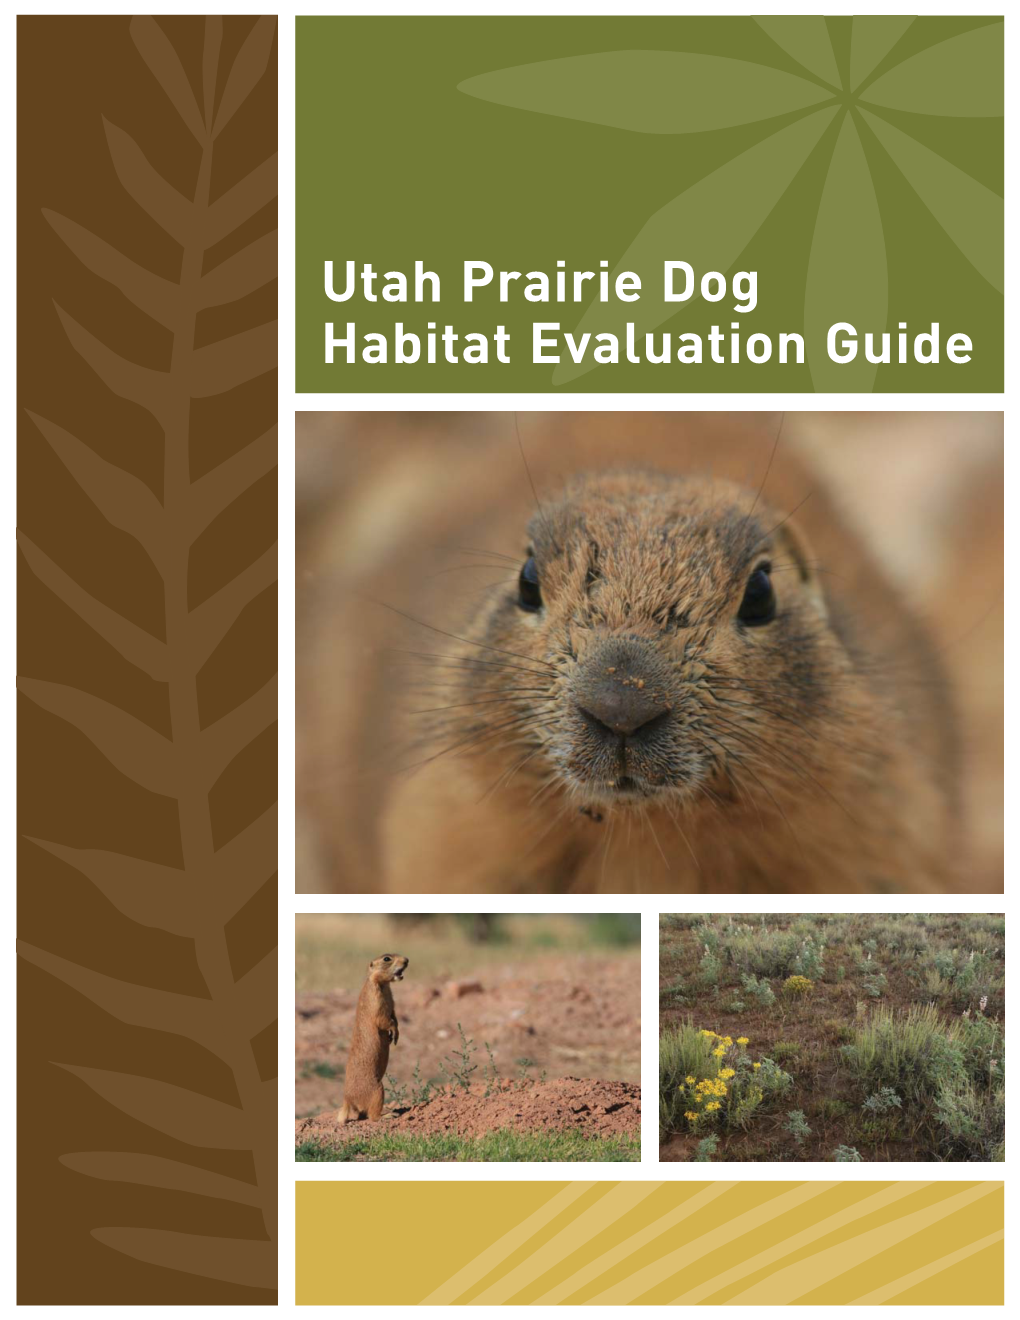 Utah Prairie Dog Habitat Evaluation Guide